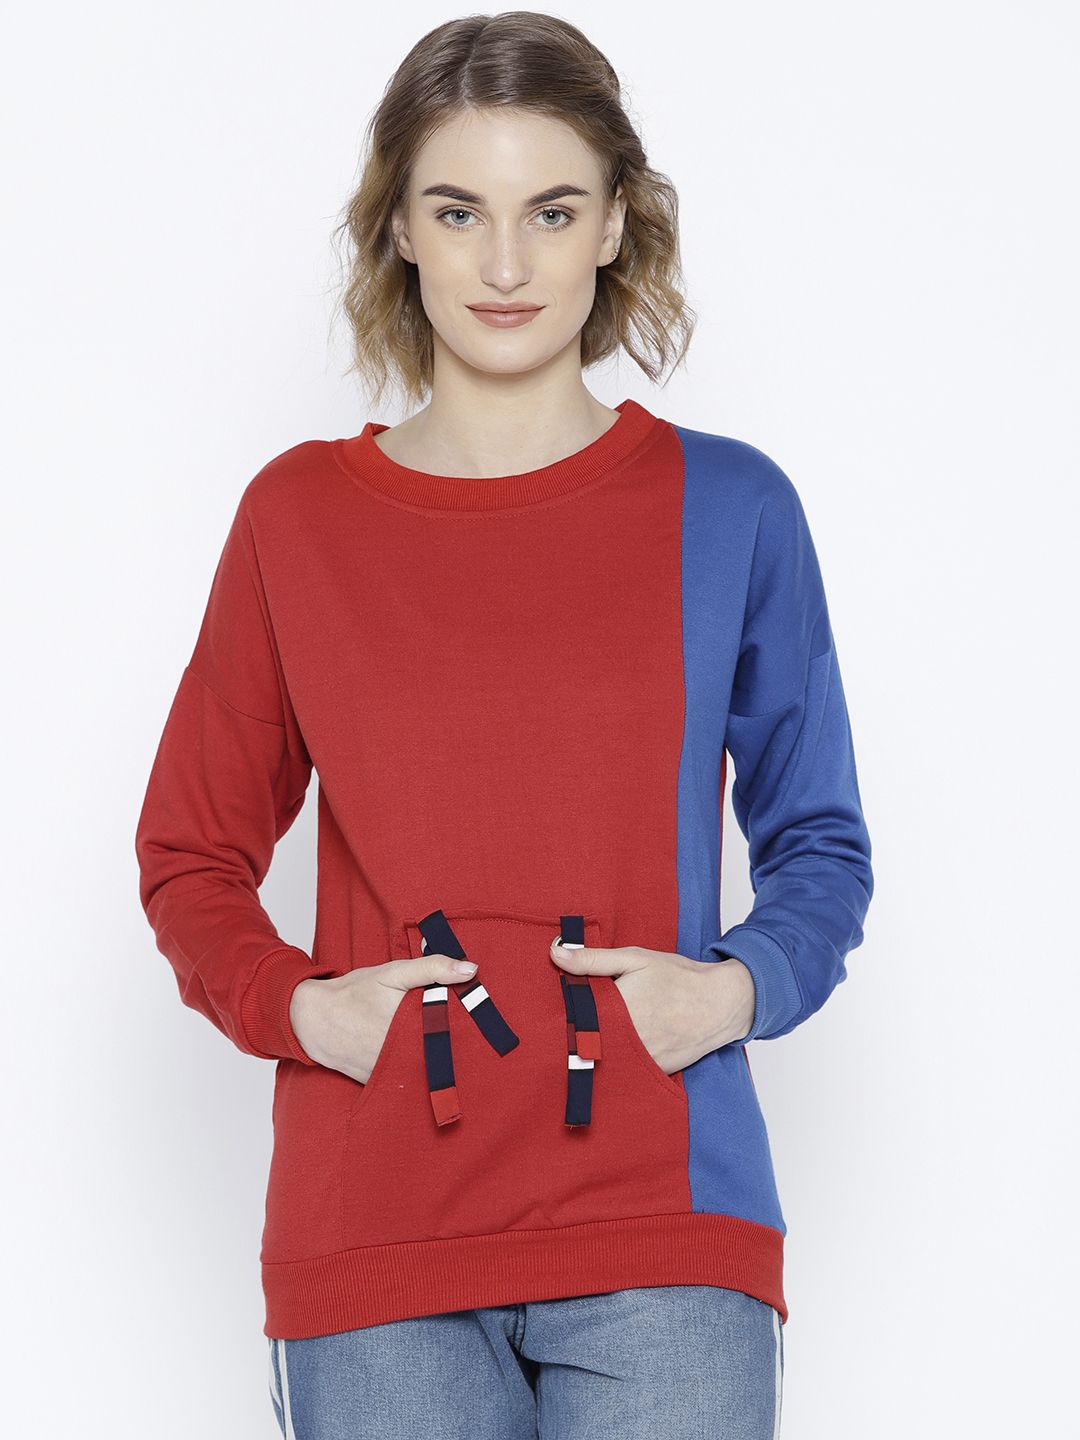 Belle Fille Women Red & Blue Colourblocked Sweatshirt Price in India